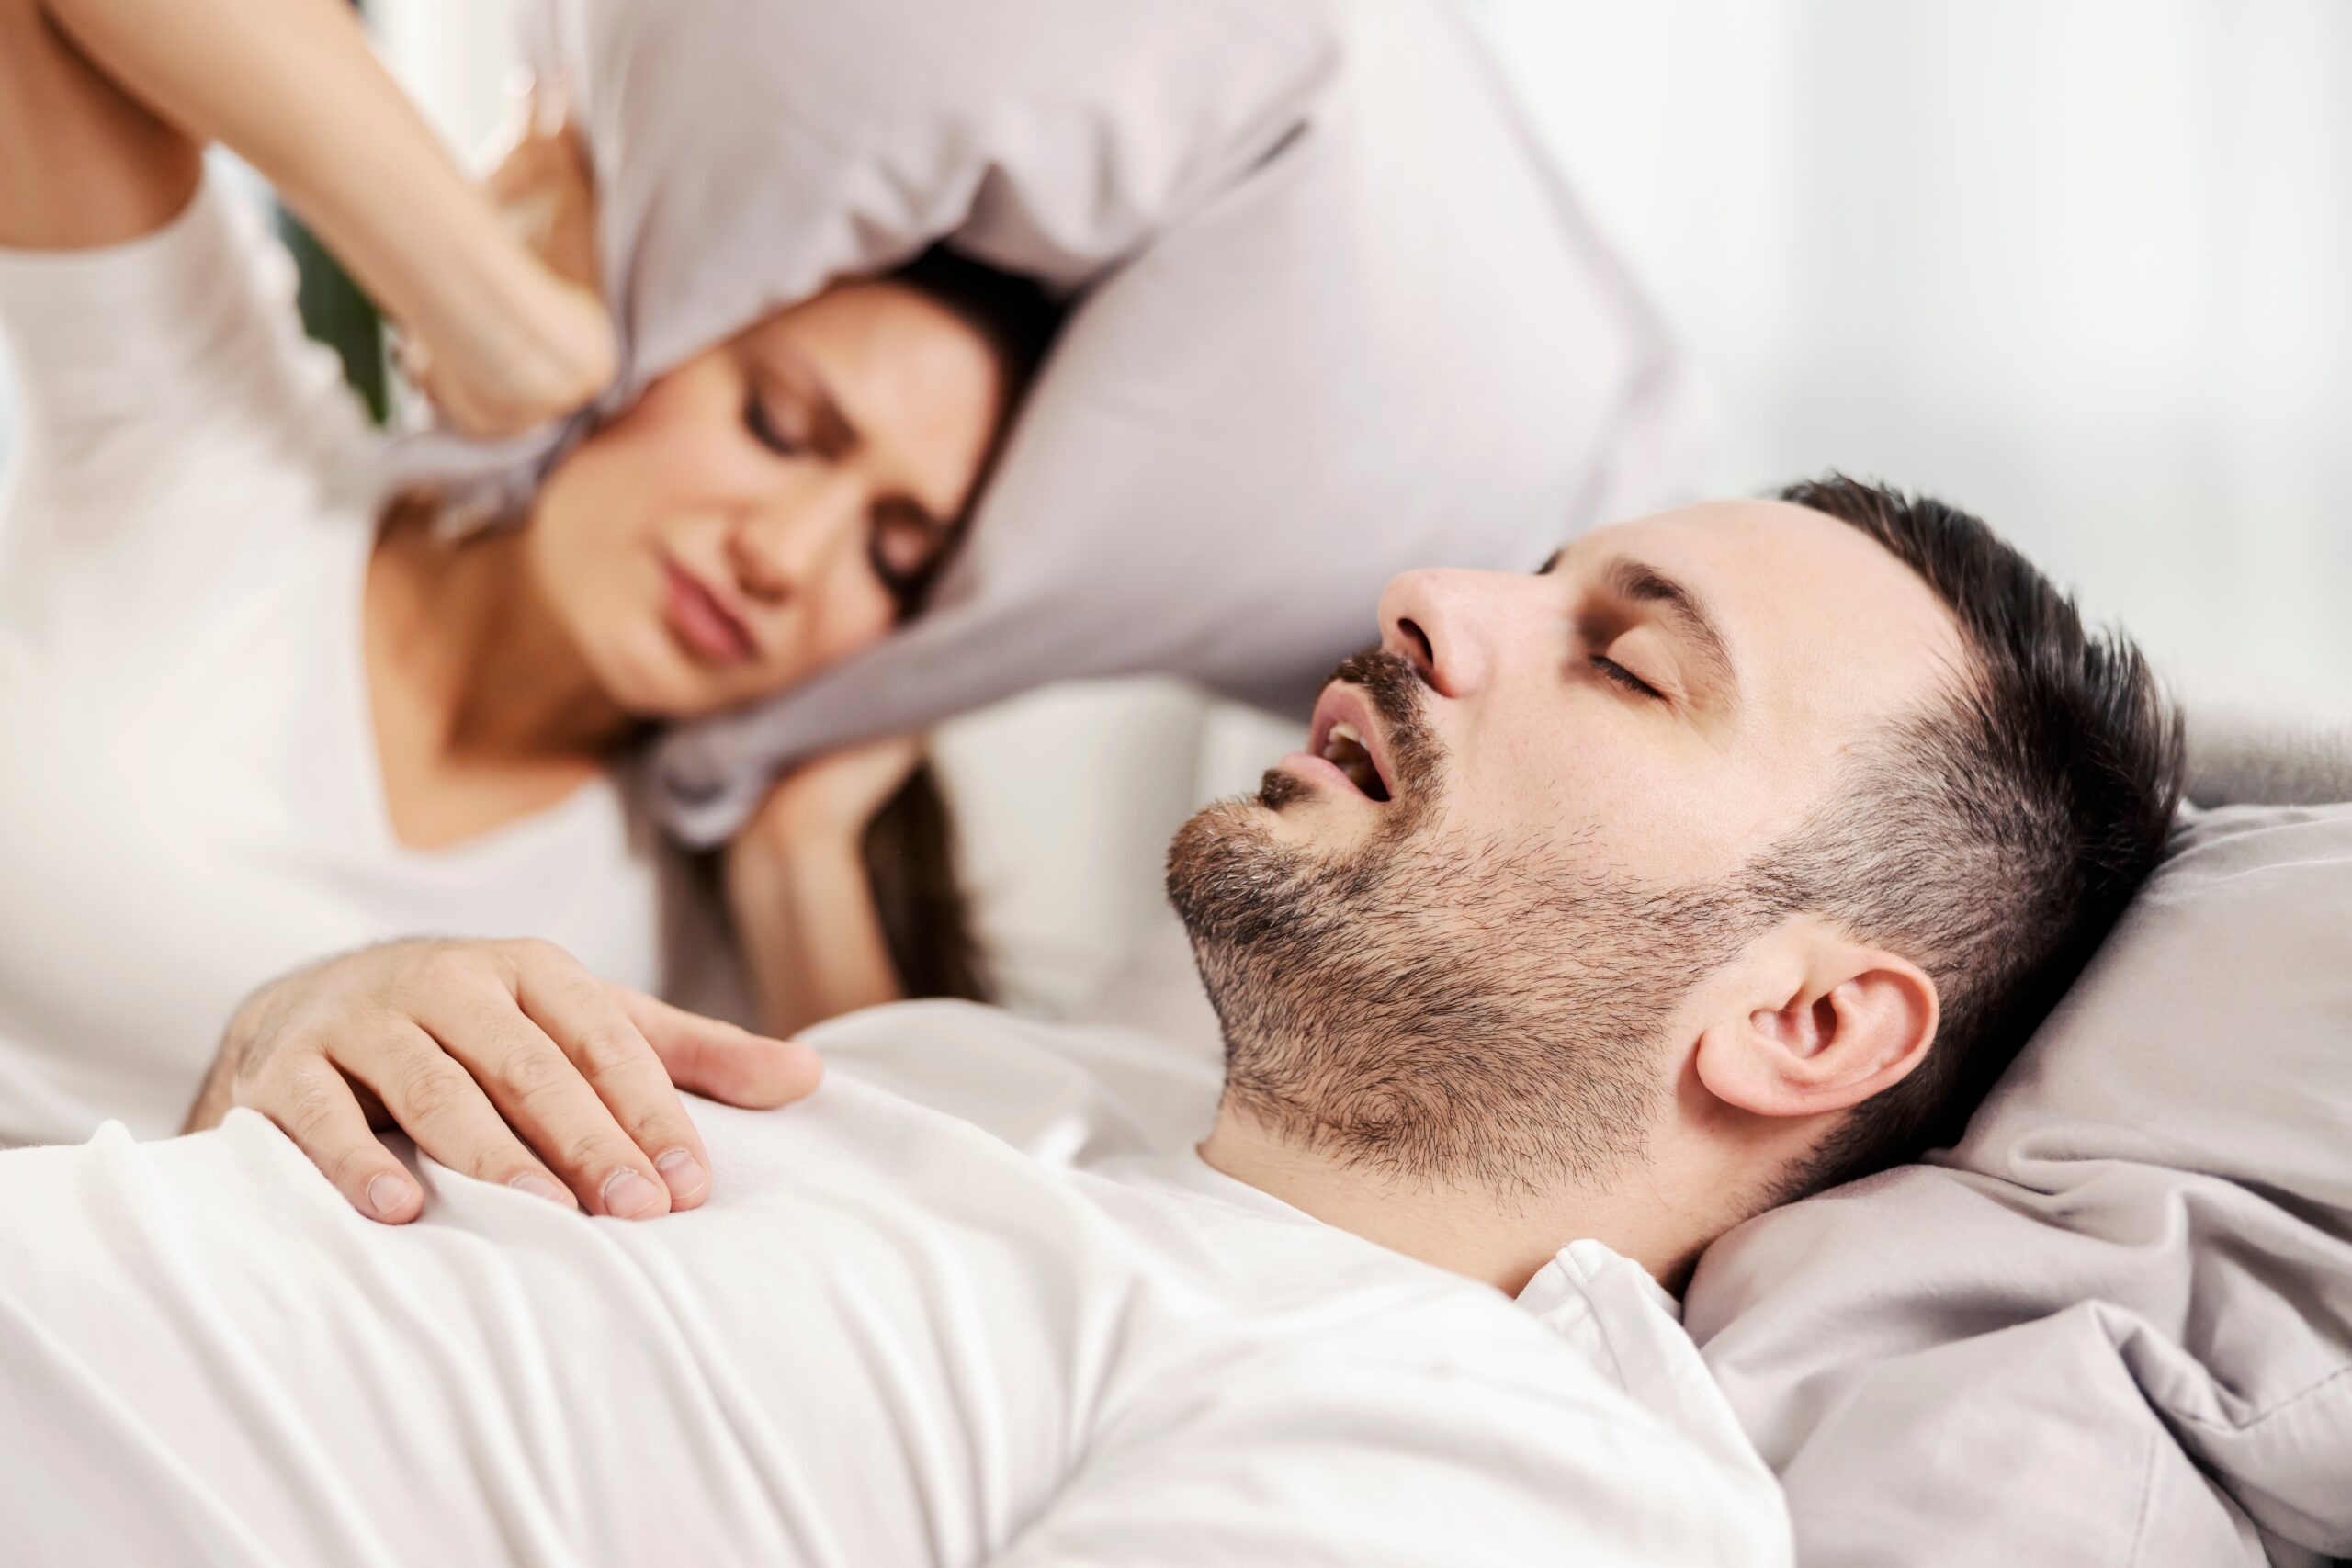 Breathing Easy: Matt Dodge’s Journey to Overcoming Sleep Apnea